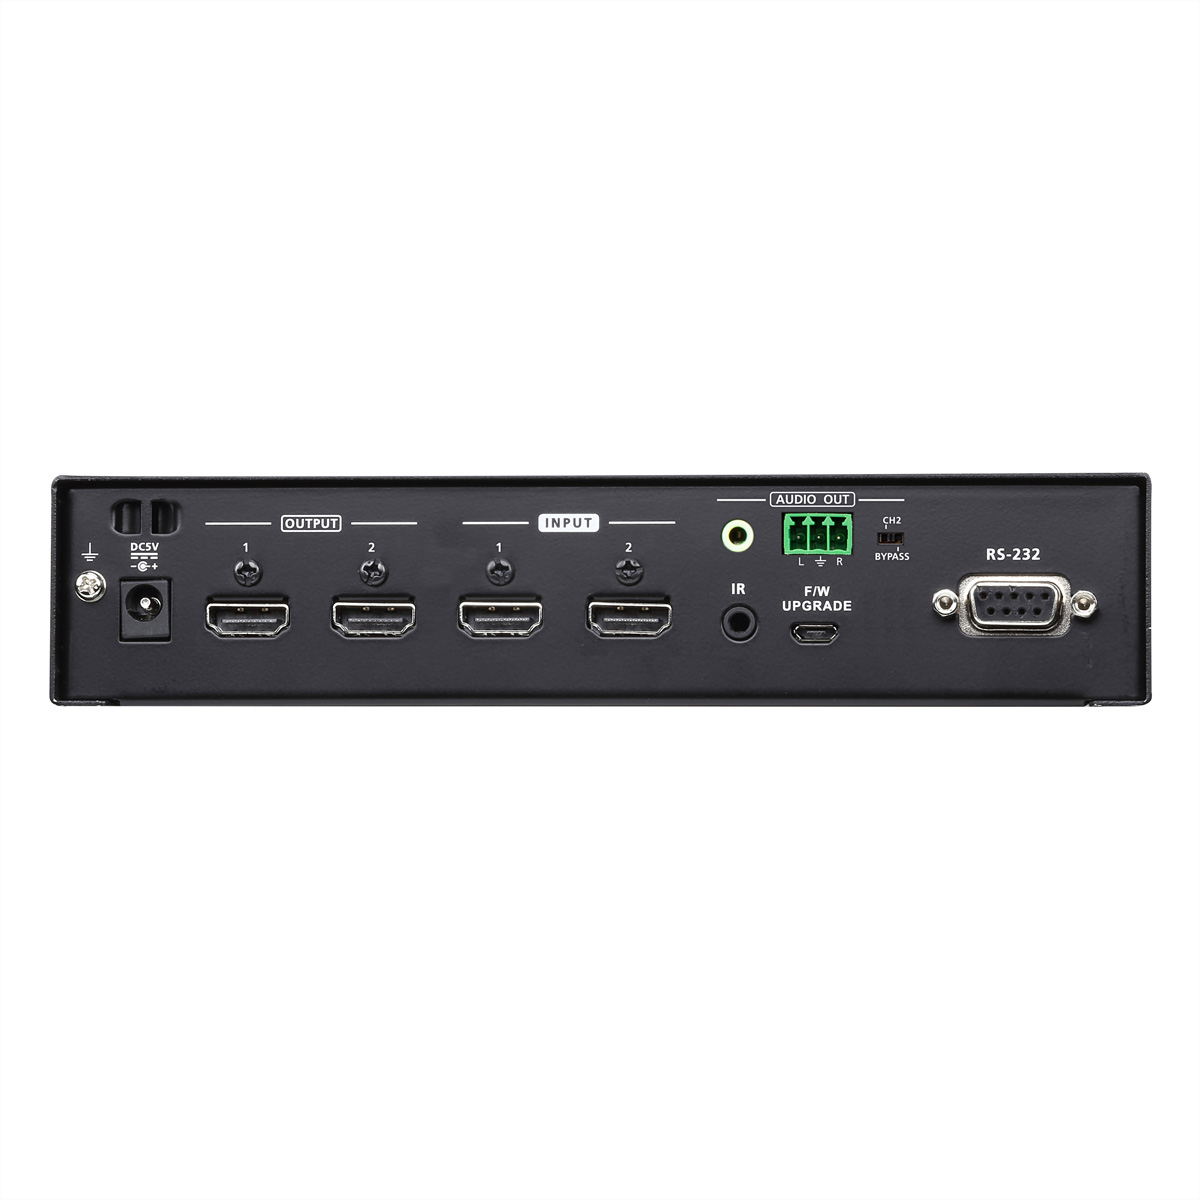 True HDMI-Video-Matrix-Switch Switch x Audio/Video Matrix HDMI 2 VM0202HB 4K ATEN 2